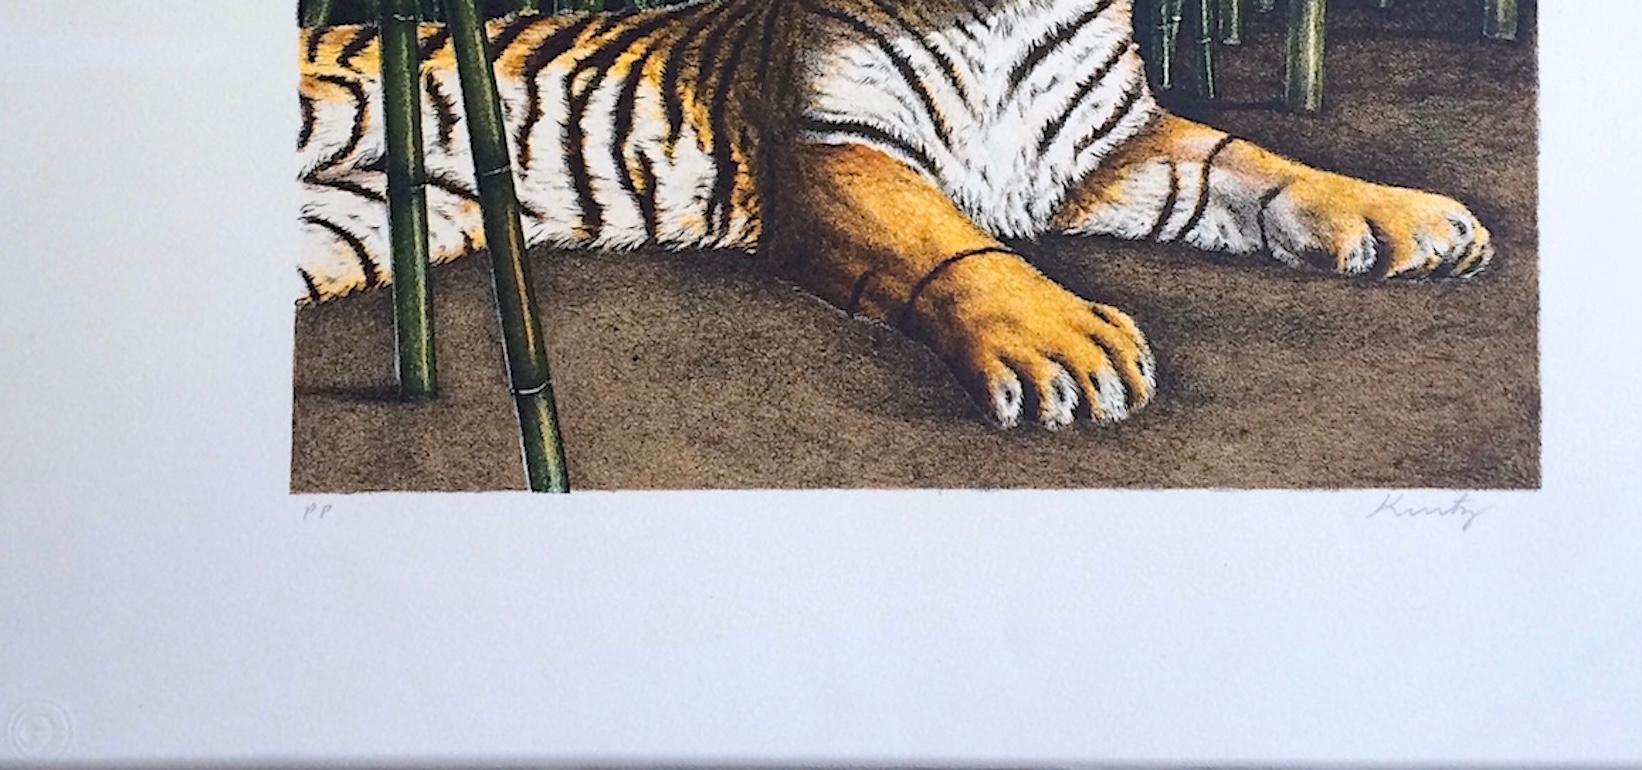 hand drawn tiger